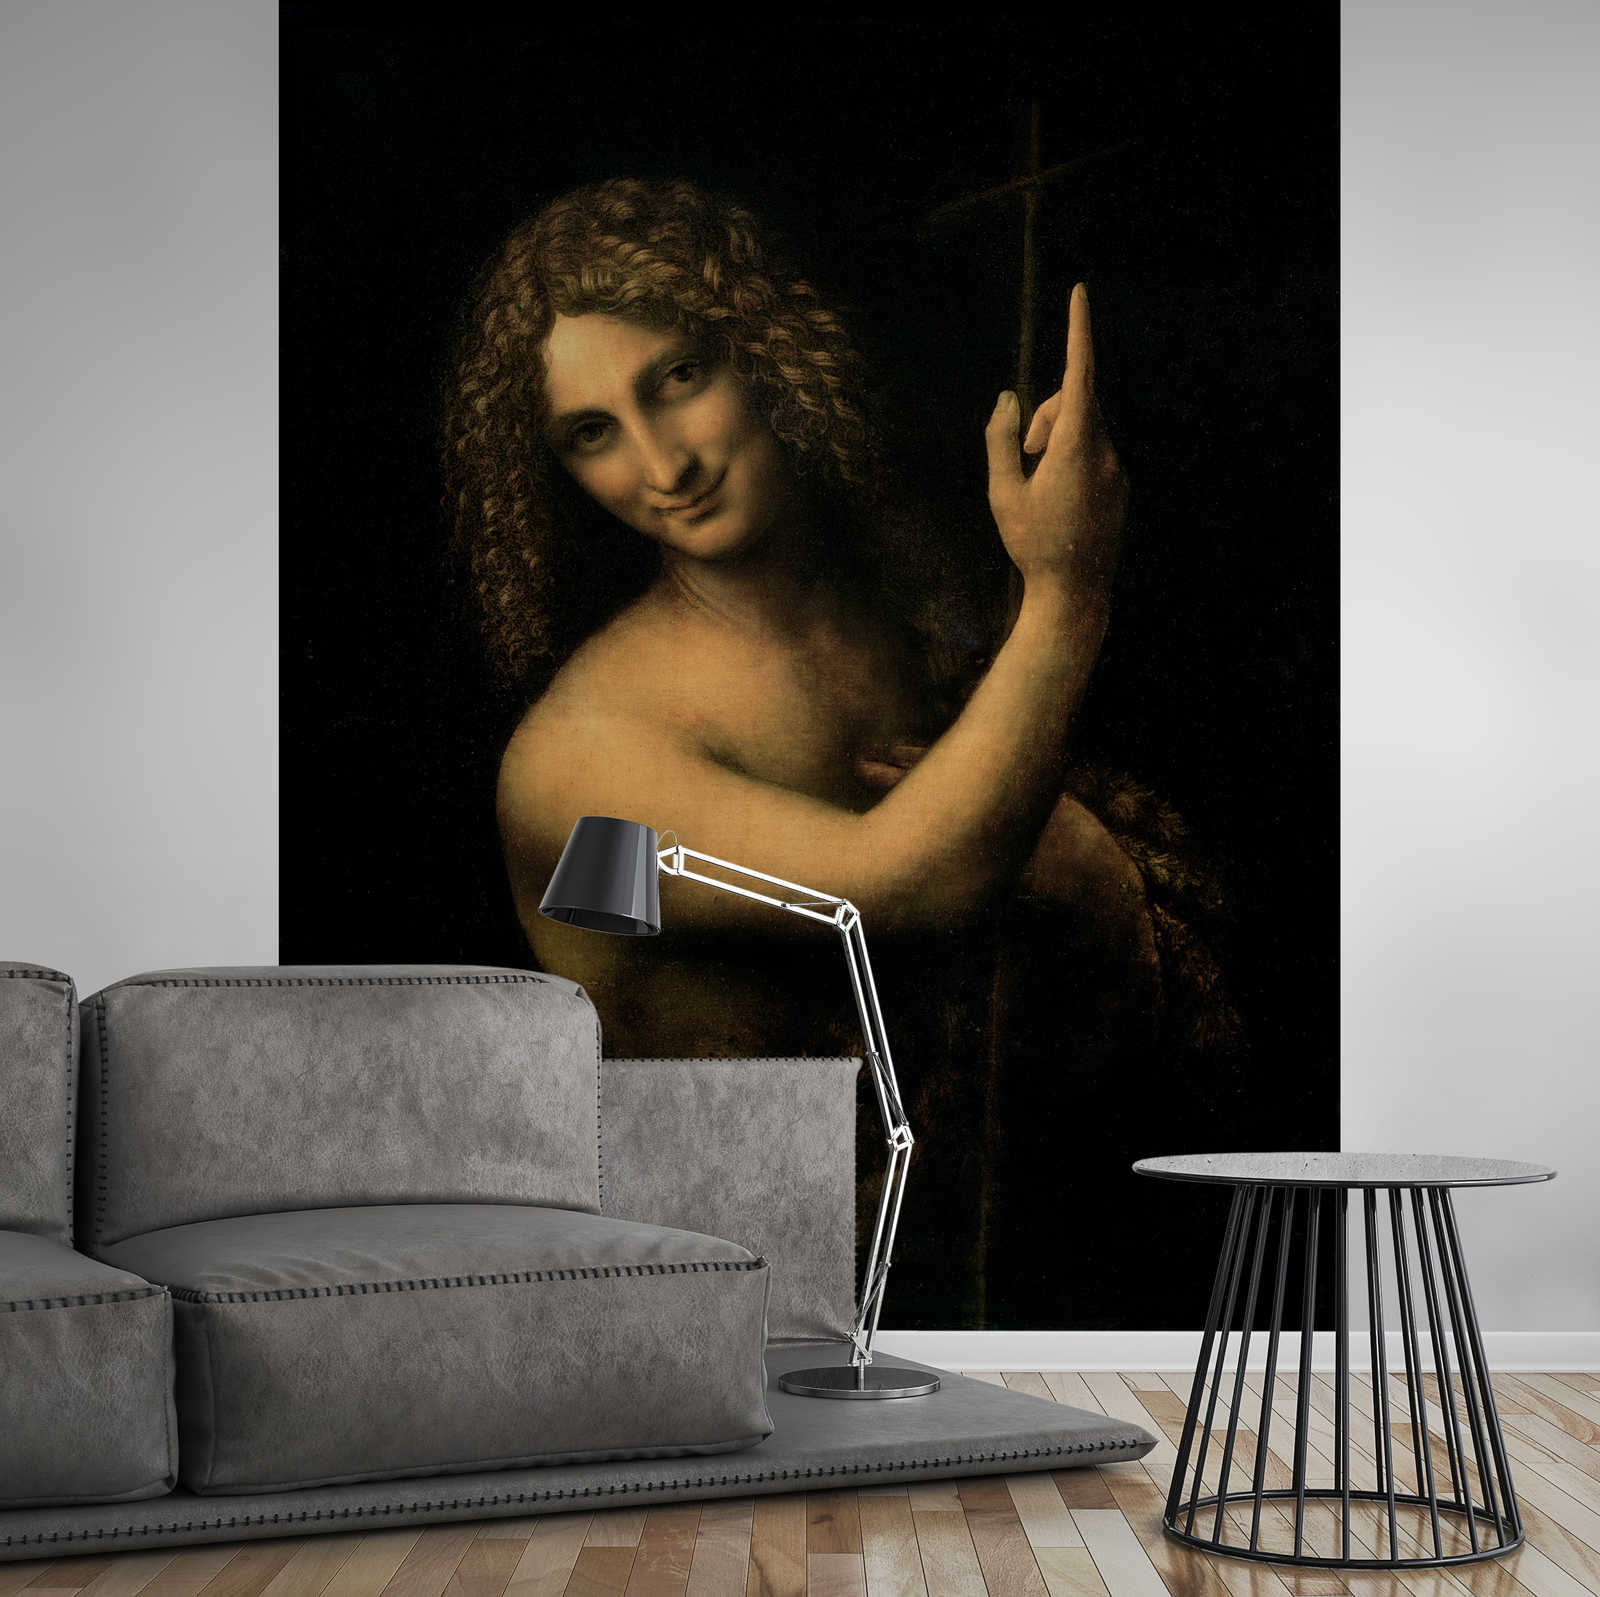             Photo wallpaper "John the Baptist" by Leonardo da Vinci
        